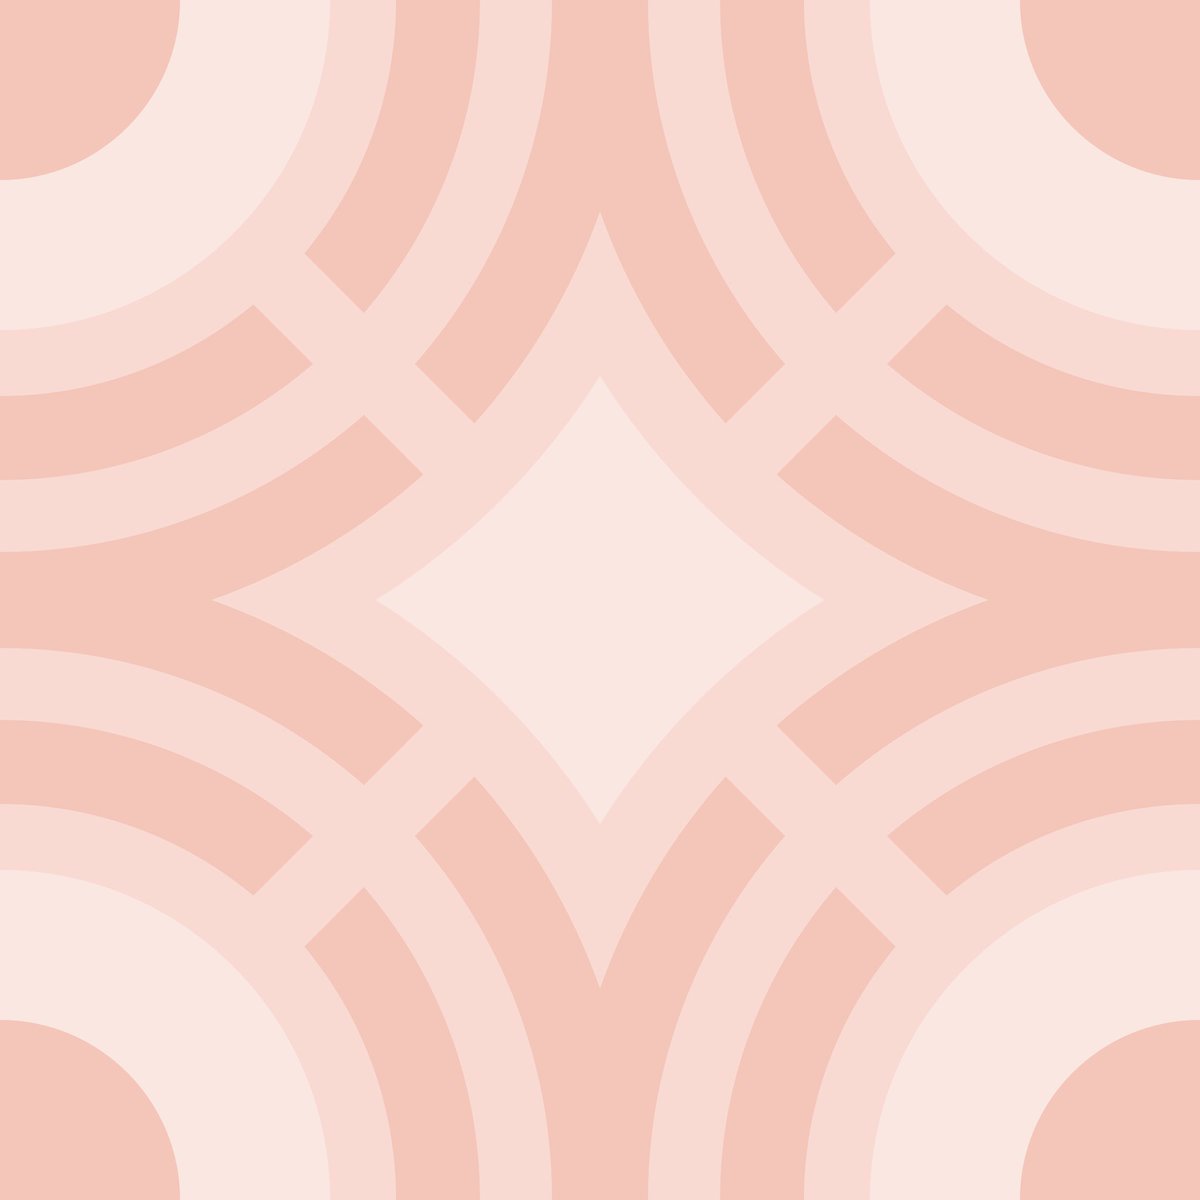 Geometric Pattern: Chapateo: Wanderlust Dark / #RedWolf redwolfoz.redbubble.com/works/158525418 via @redbubble spoonflower.com/designs/161733… via @spoonflower #art #geometricpattern #geometry #spanish #retro #tile #diamond #circle #antique